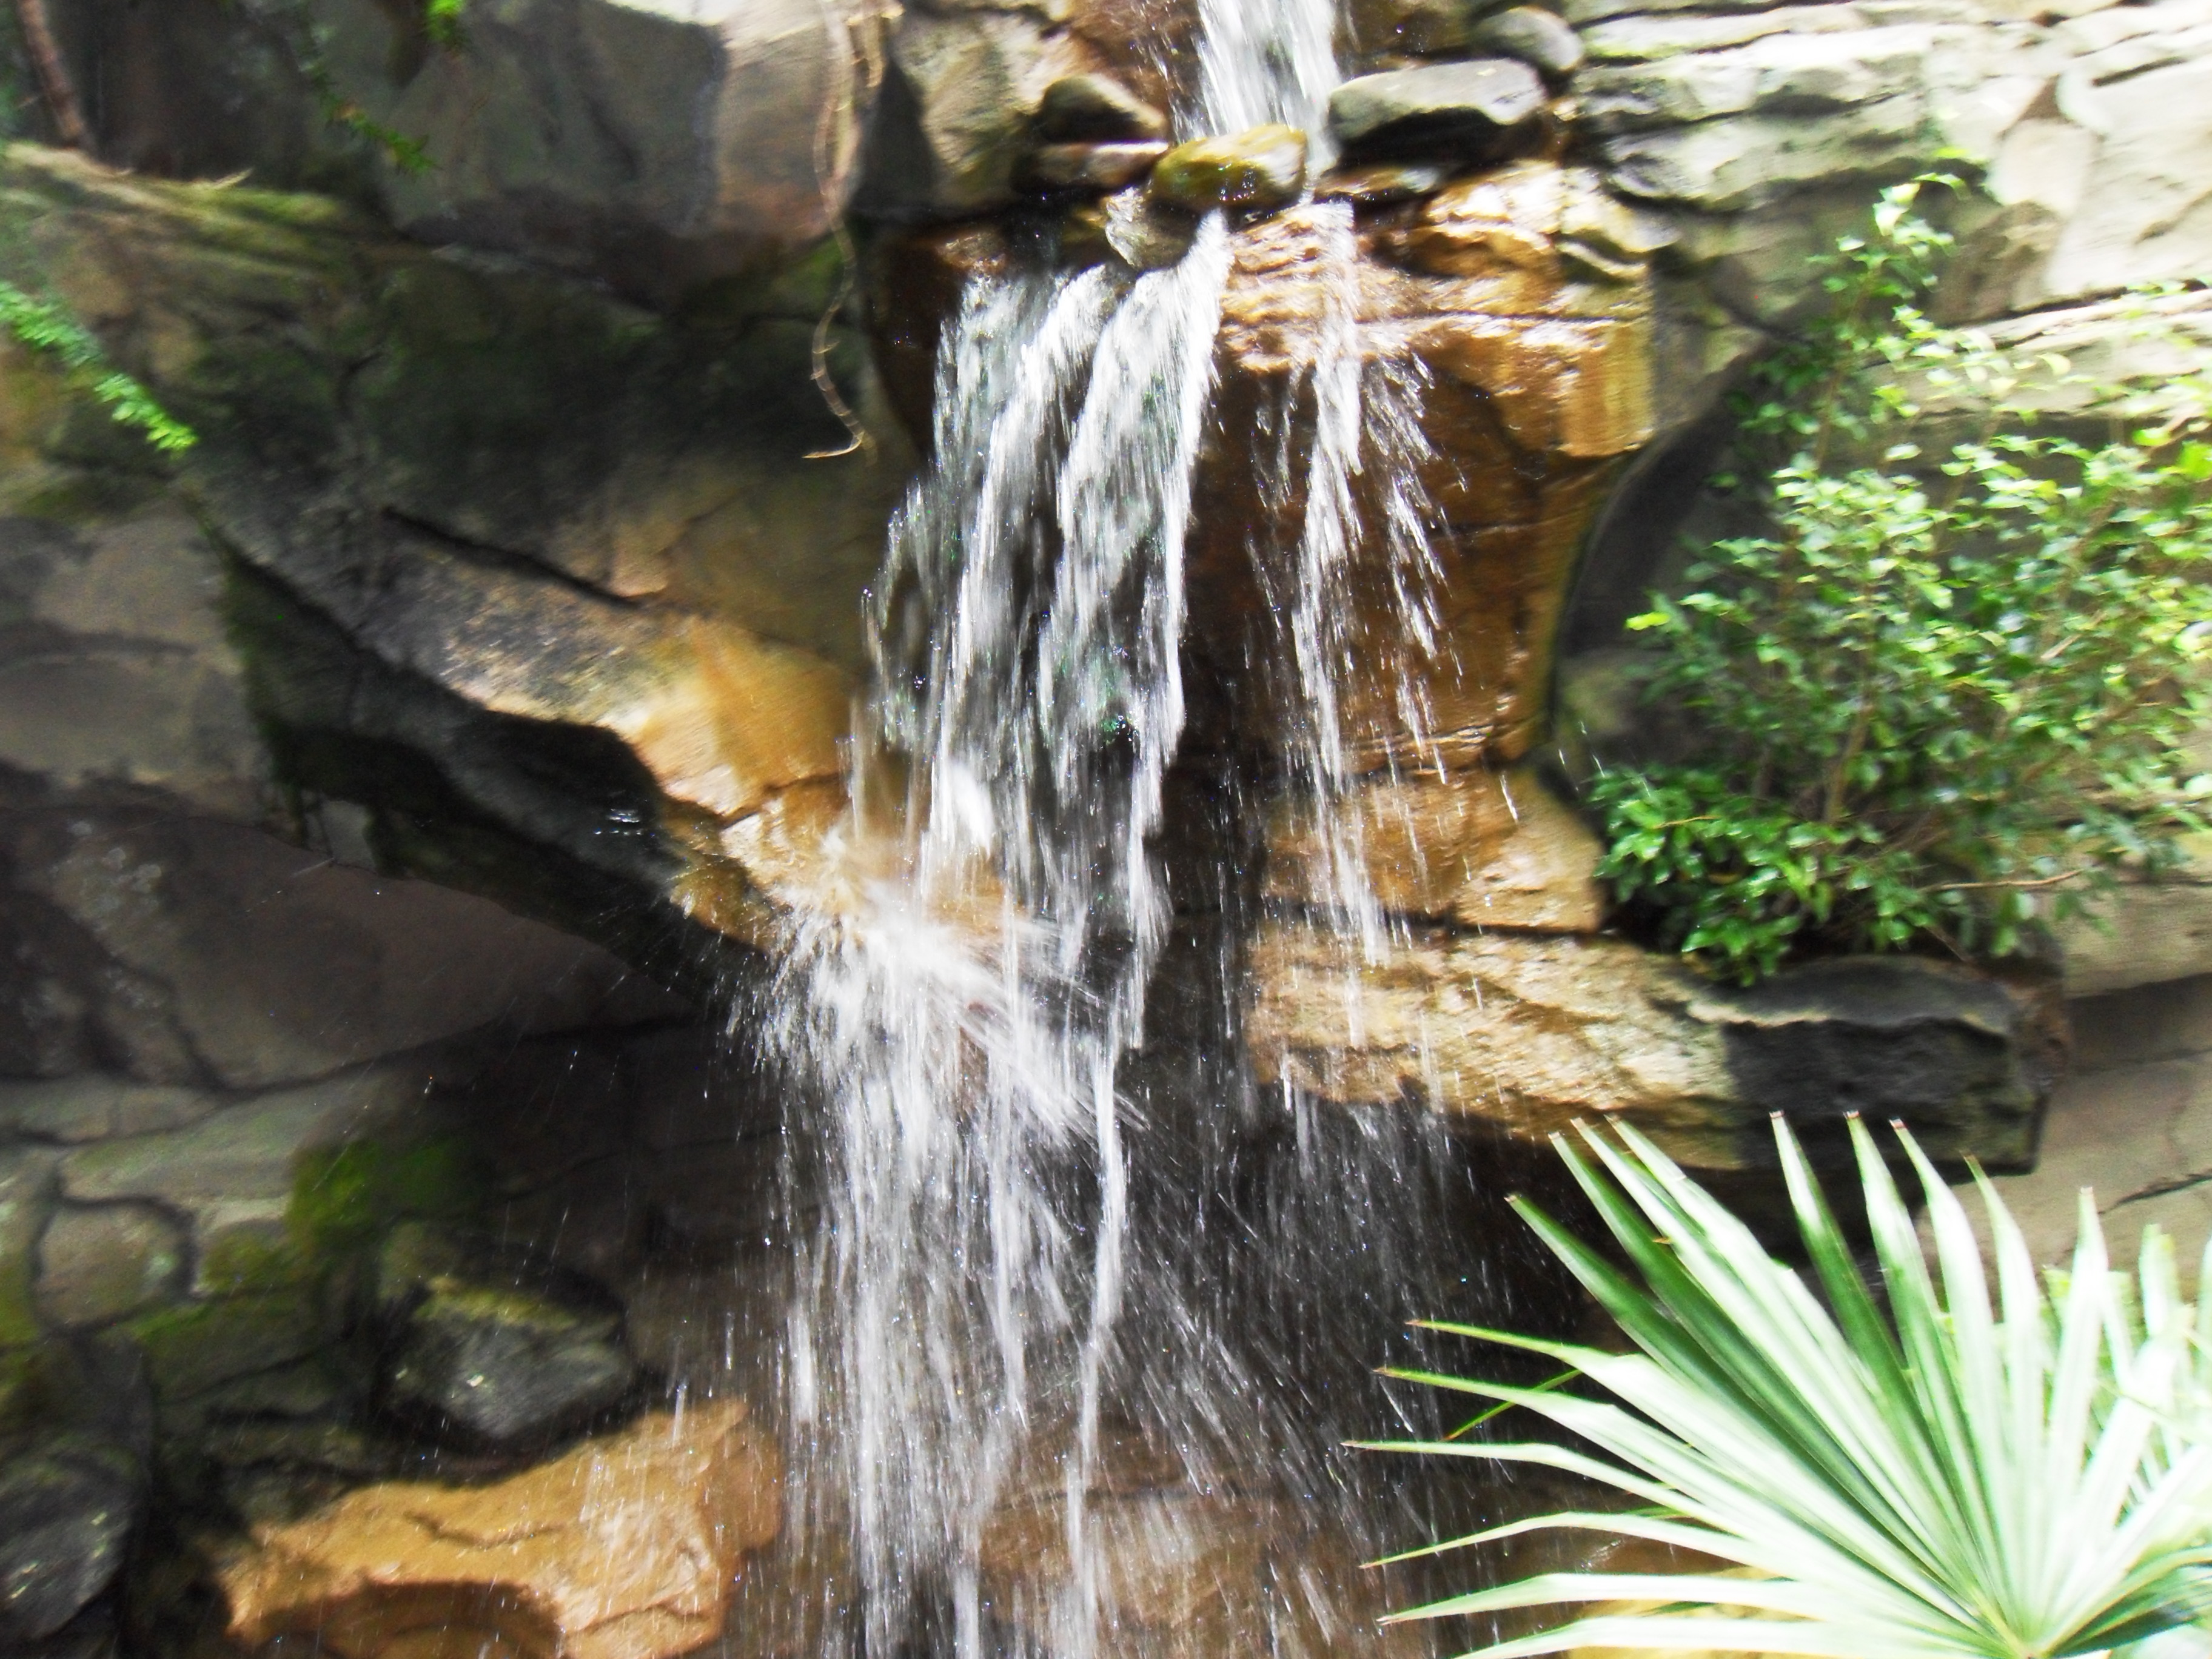 Water Flows through the rain forest